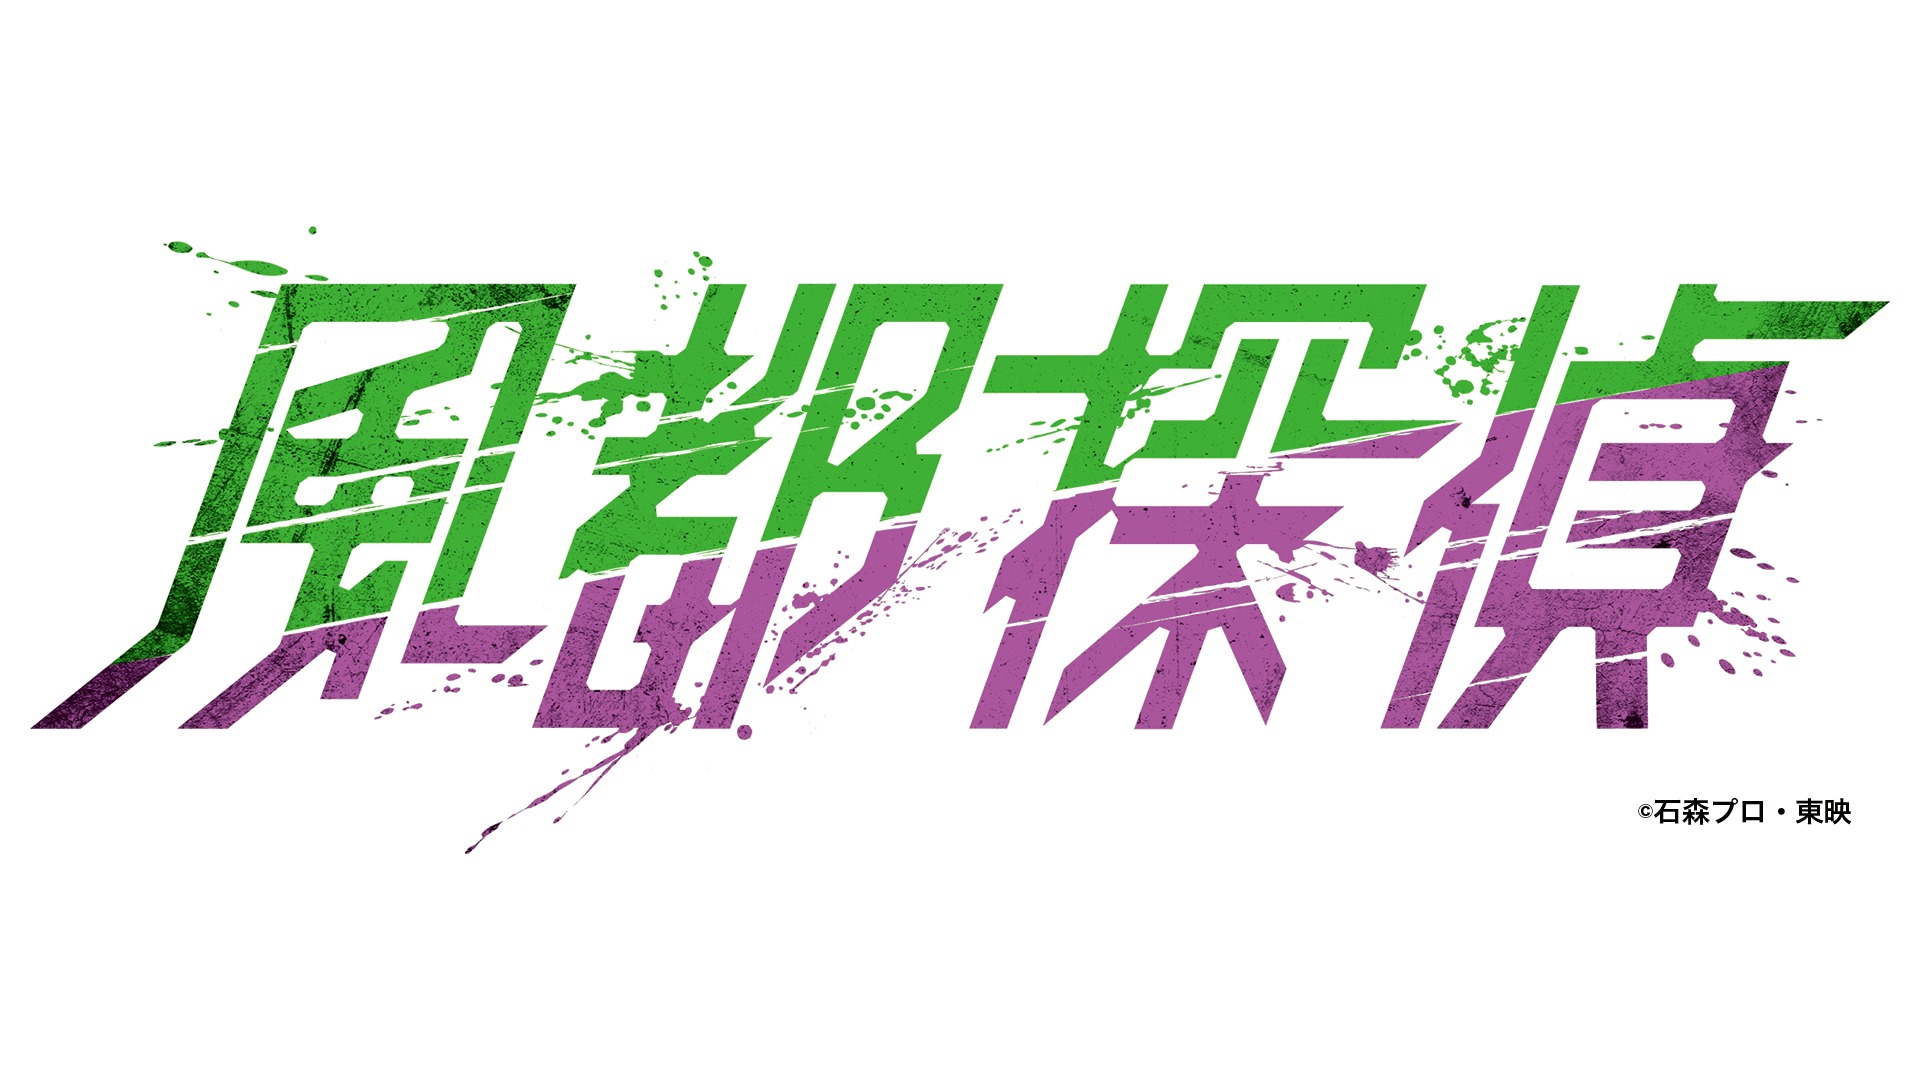 Kamen Rider Anime FUUTO PI Coming to Crunchyroll in Summer 2022 -  Crunchyroll News